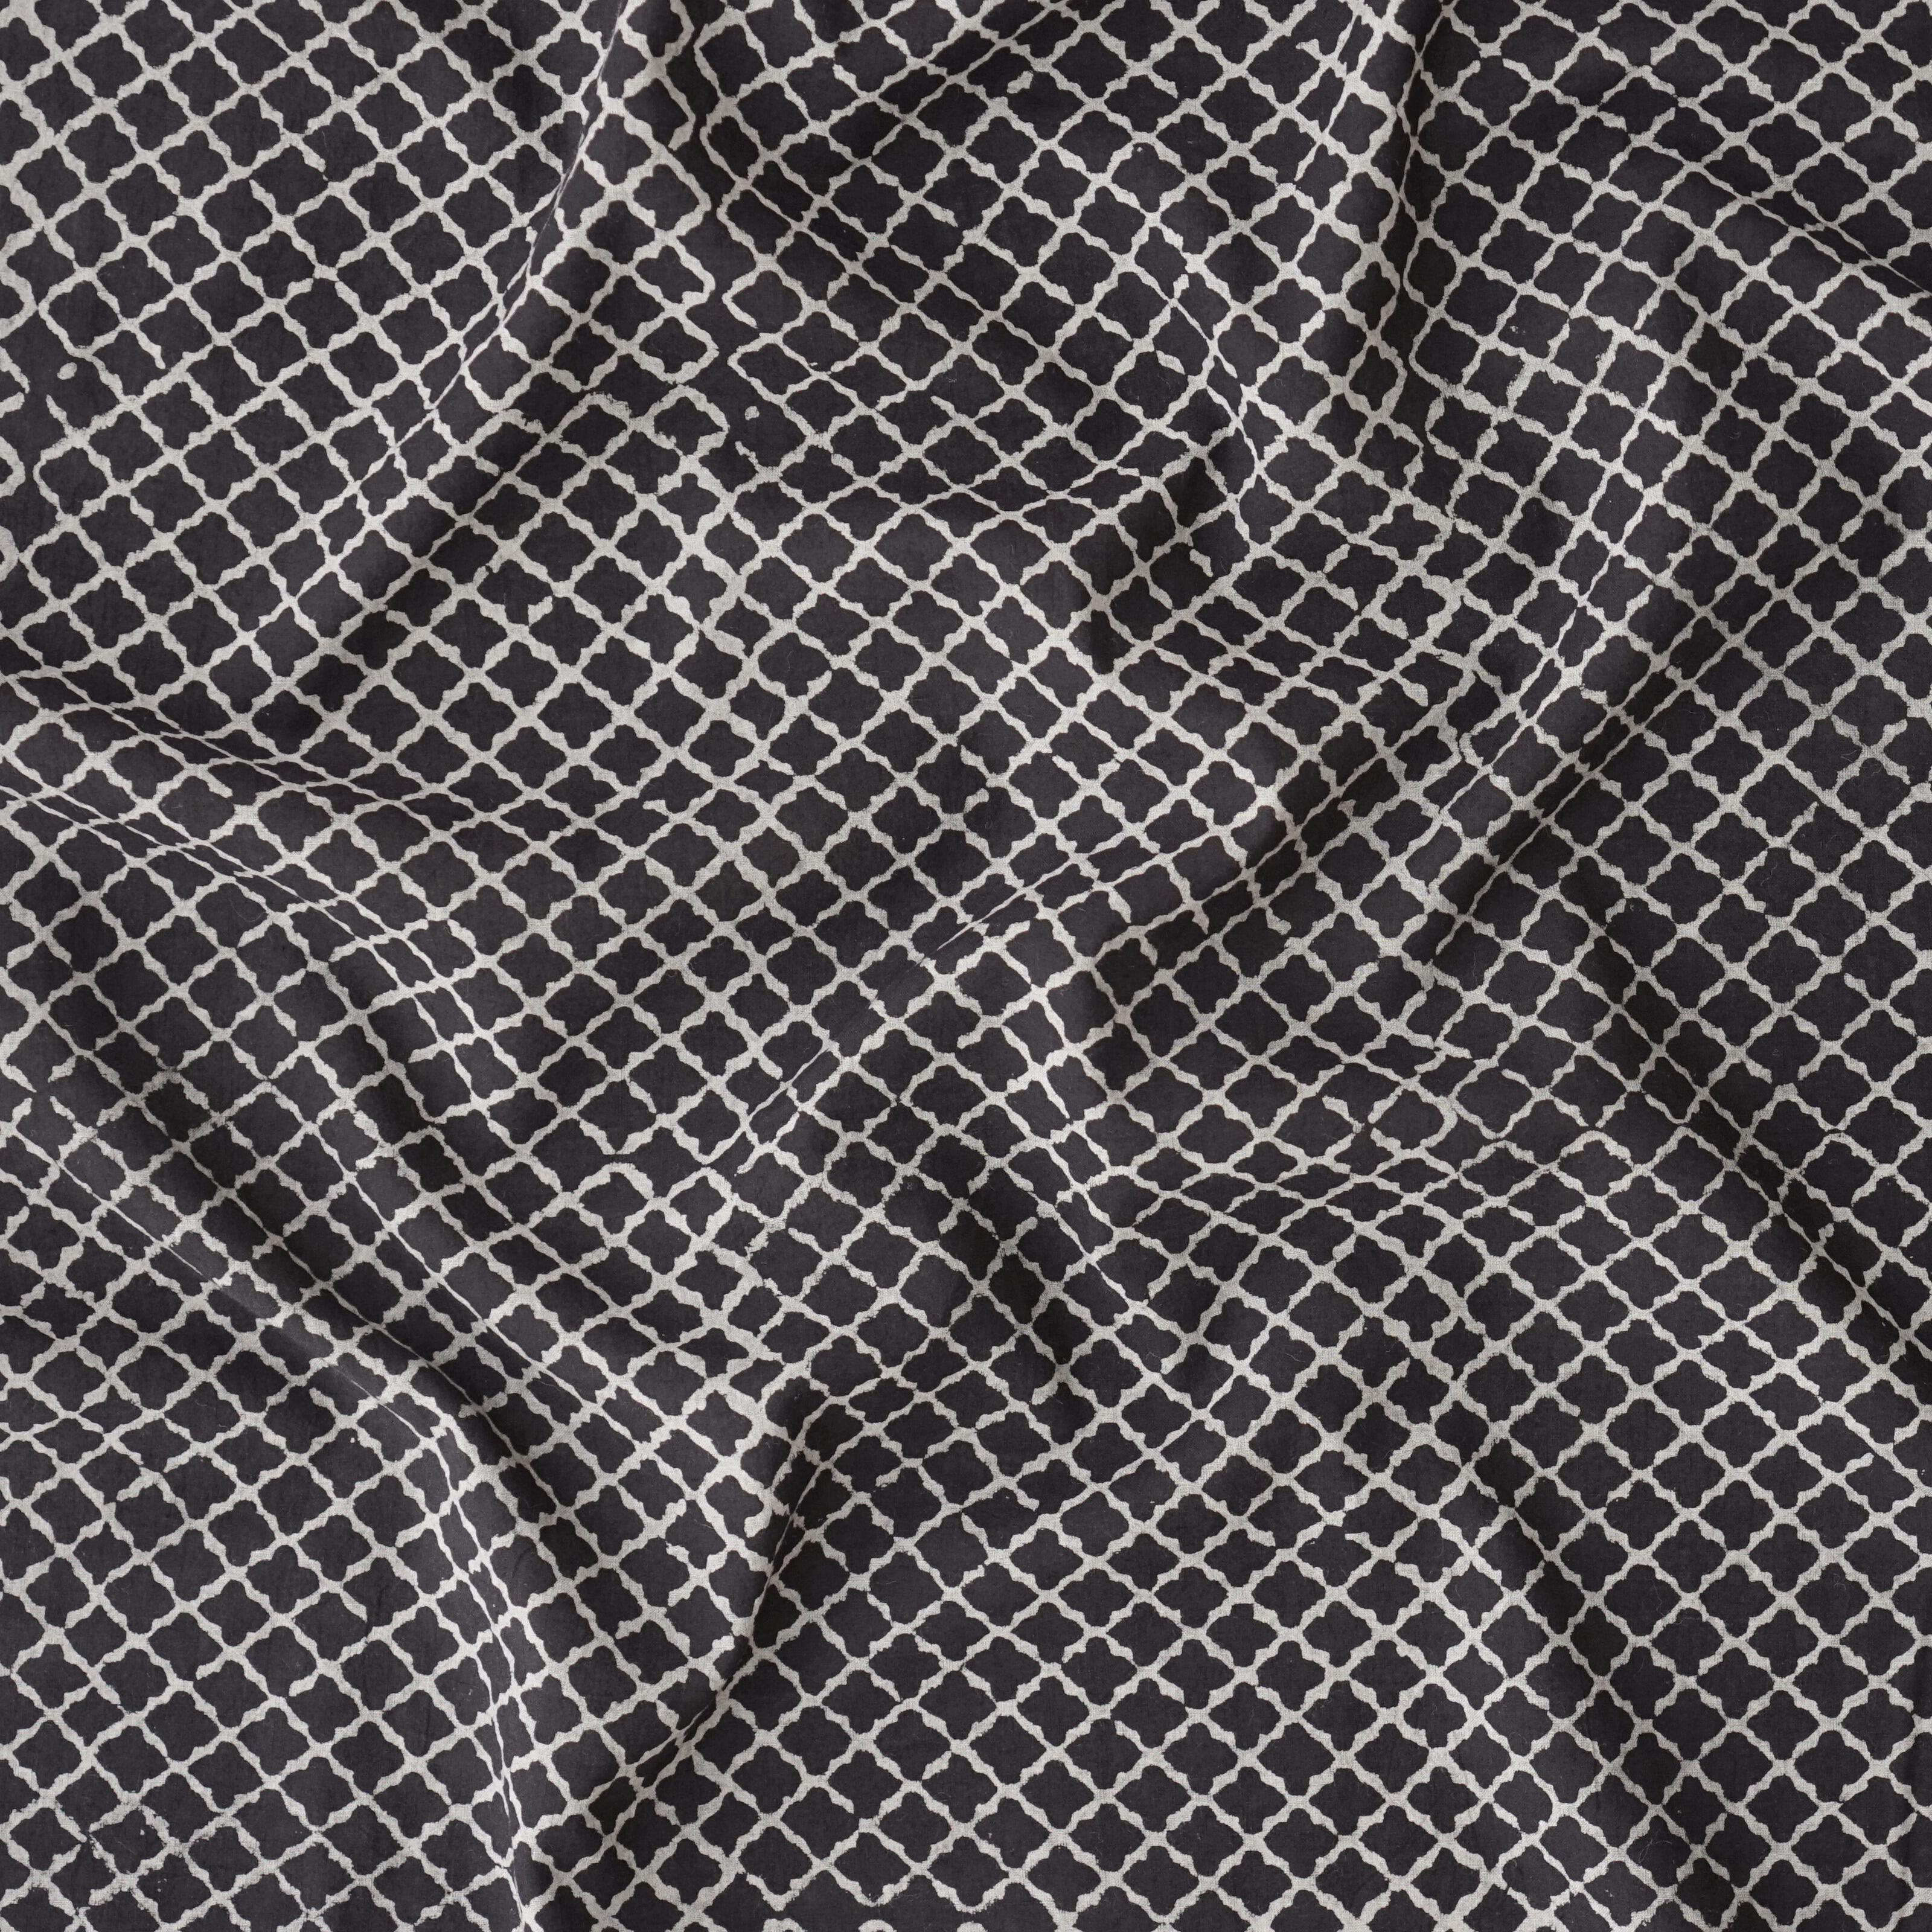 Block Printed Fabric, 100% Cotton, Ajrak Design: Iron Black Base, White Clover. Contrast